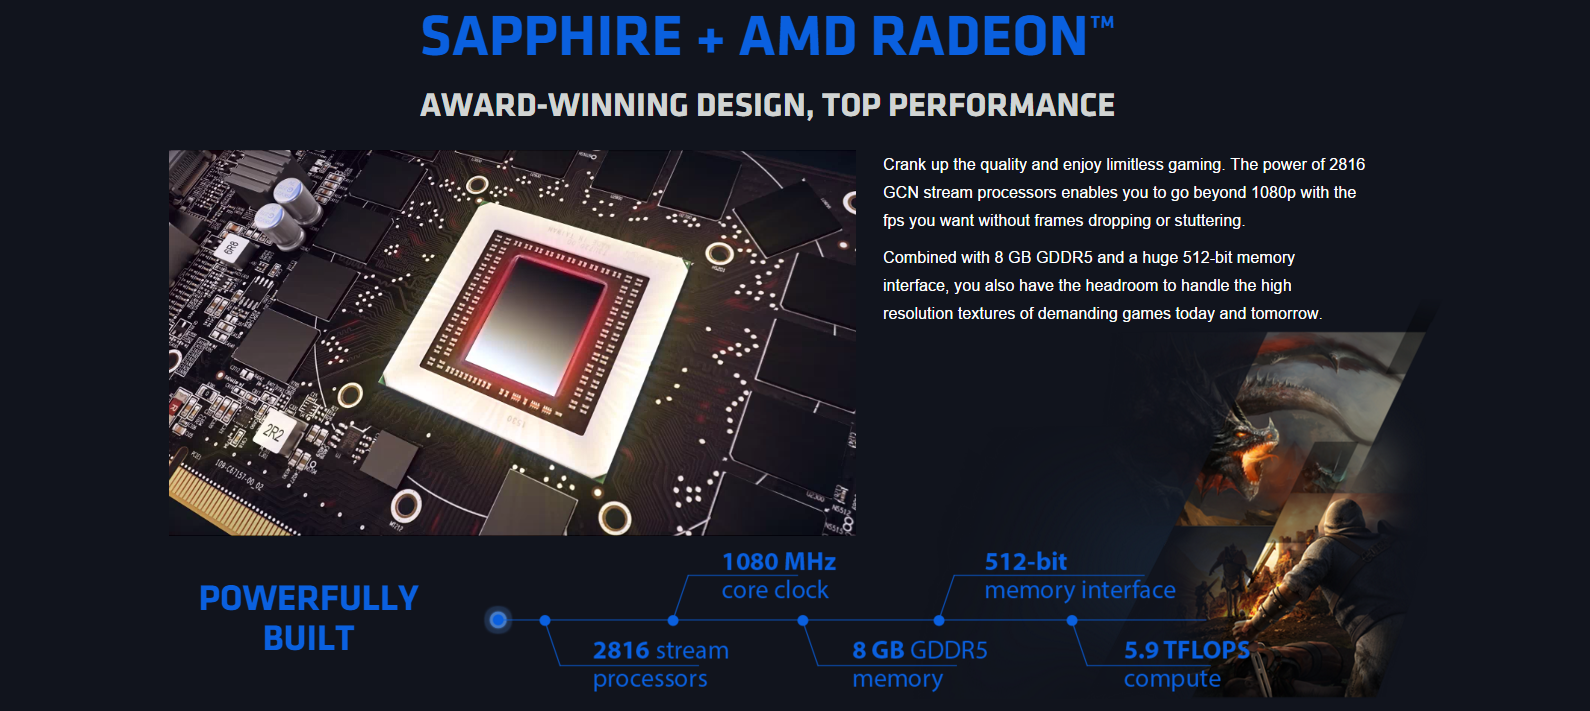 Sapphire AMD 390X